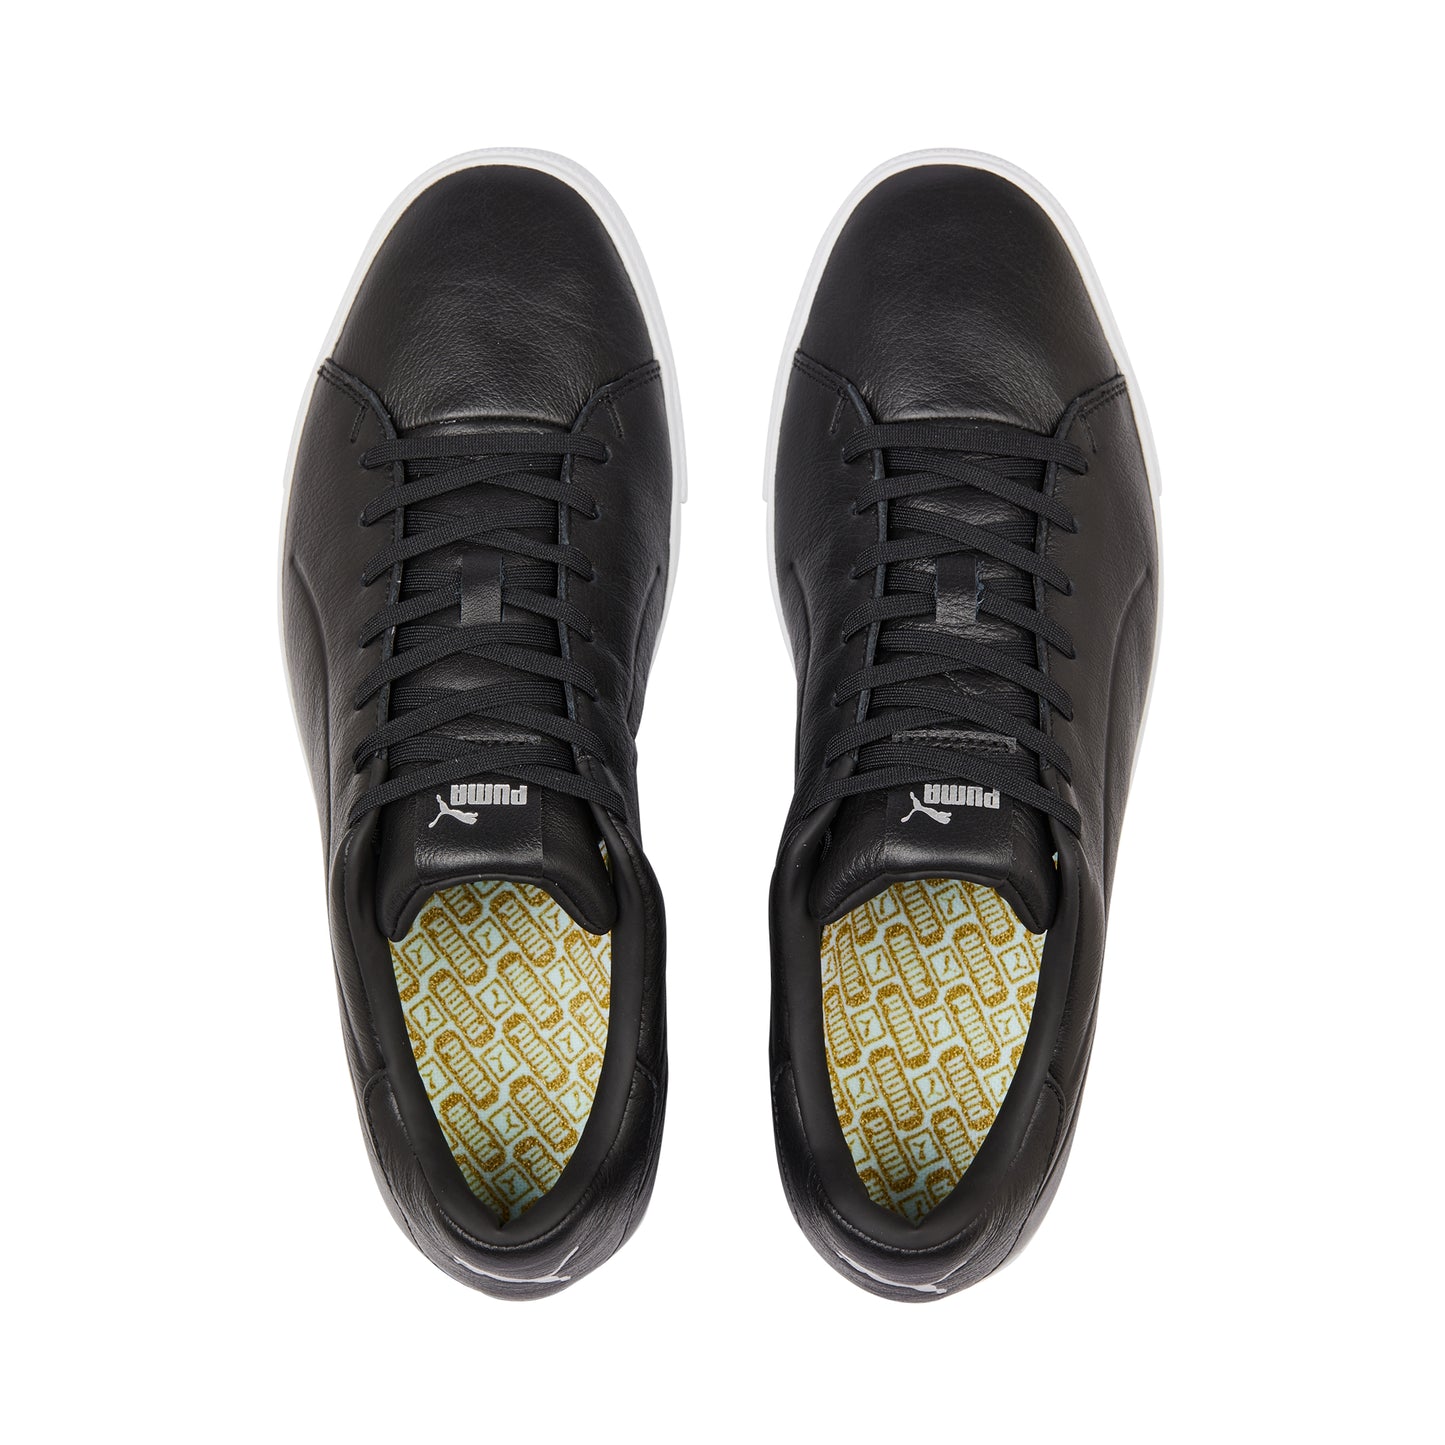 Puma Men's Fusion Classic Spikeless Golf Shoes - Black